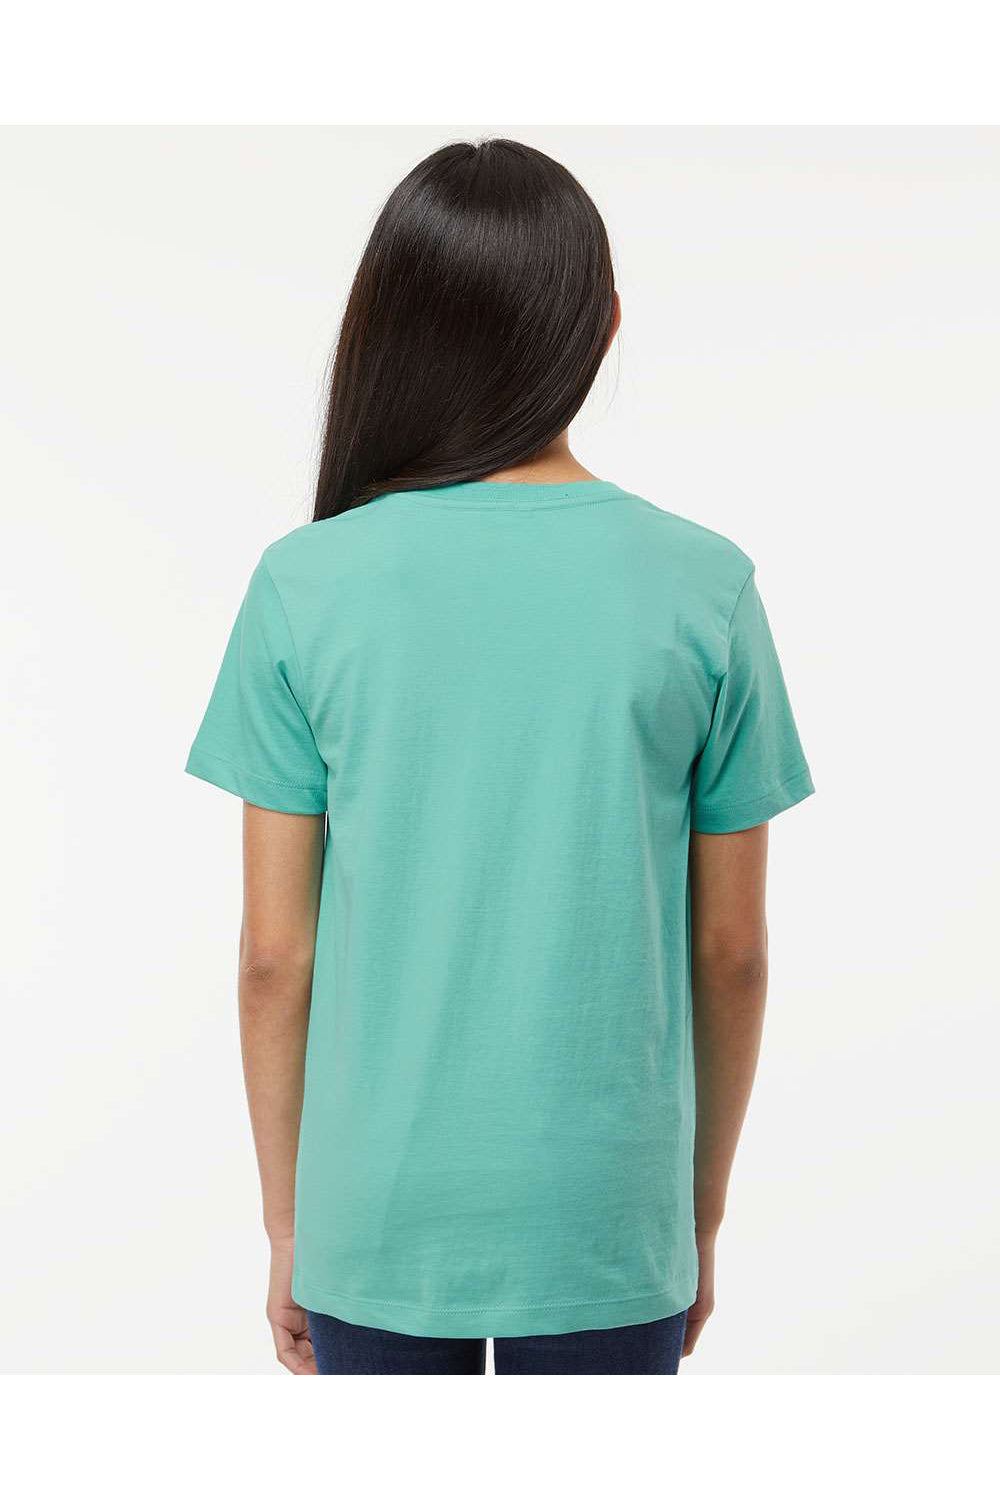 SoftShirts 402 Youth Organic Short Sleeve Crewneck T-Shirt Seaform Green Model Back